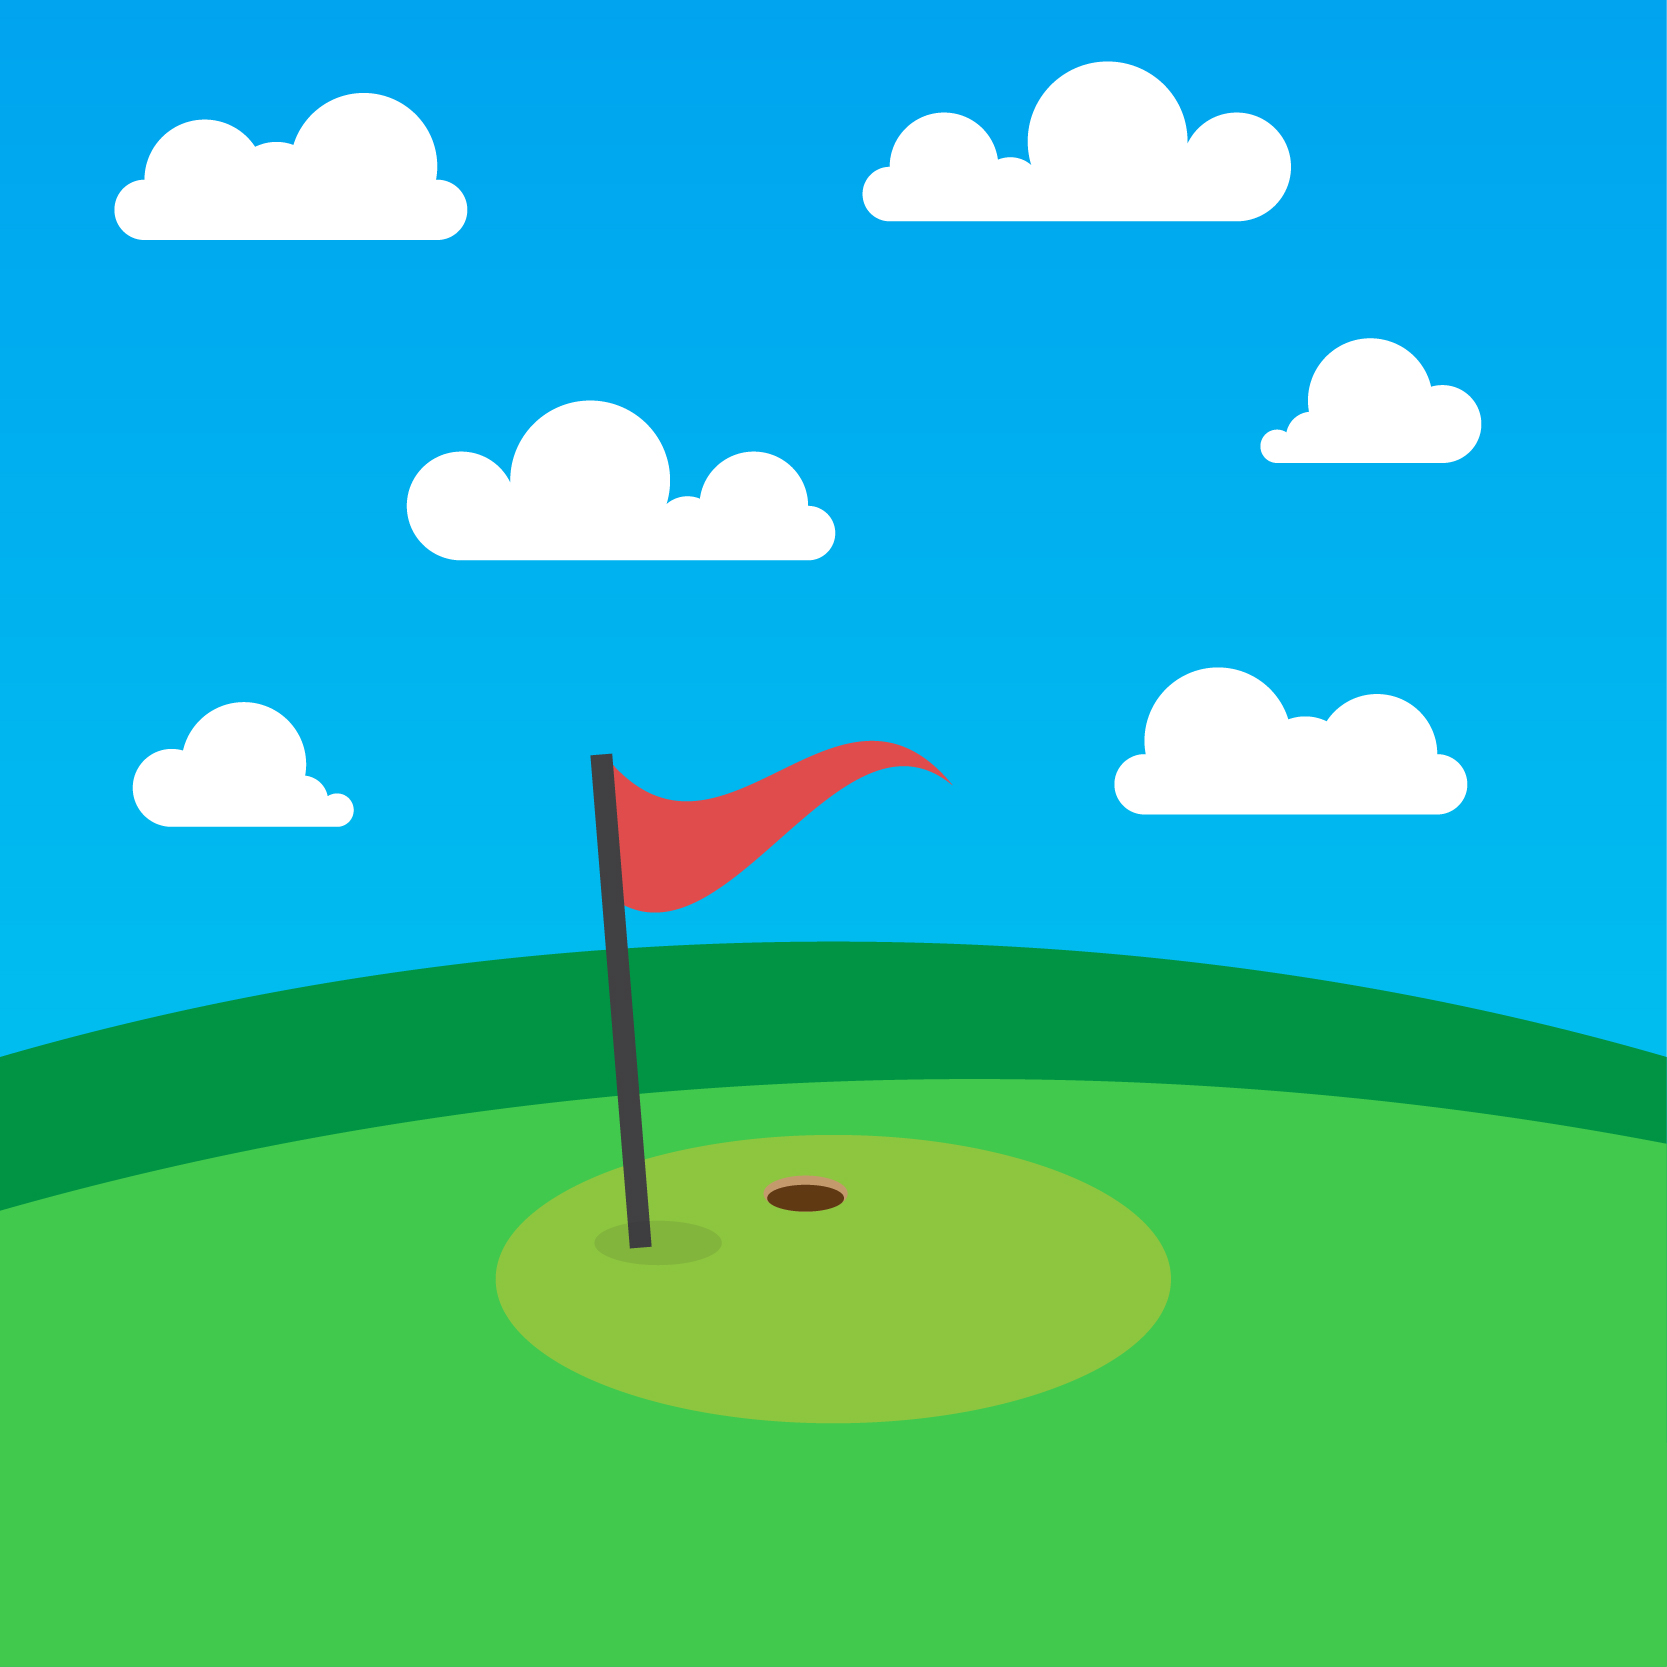 Spring Golf Image